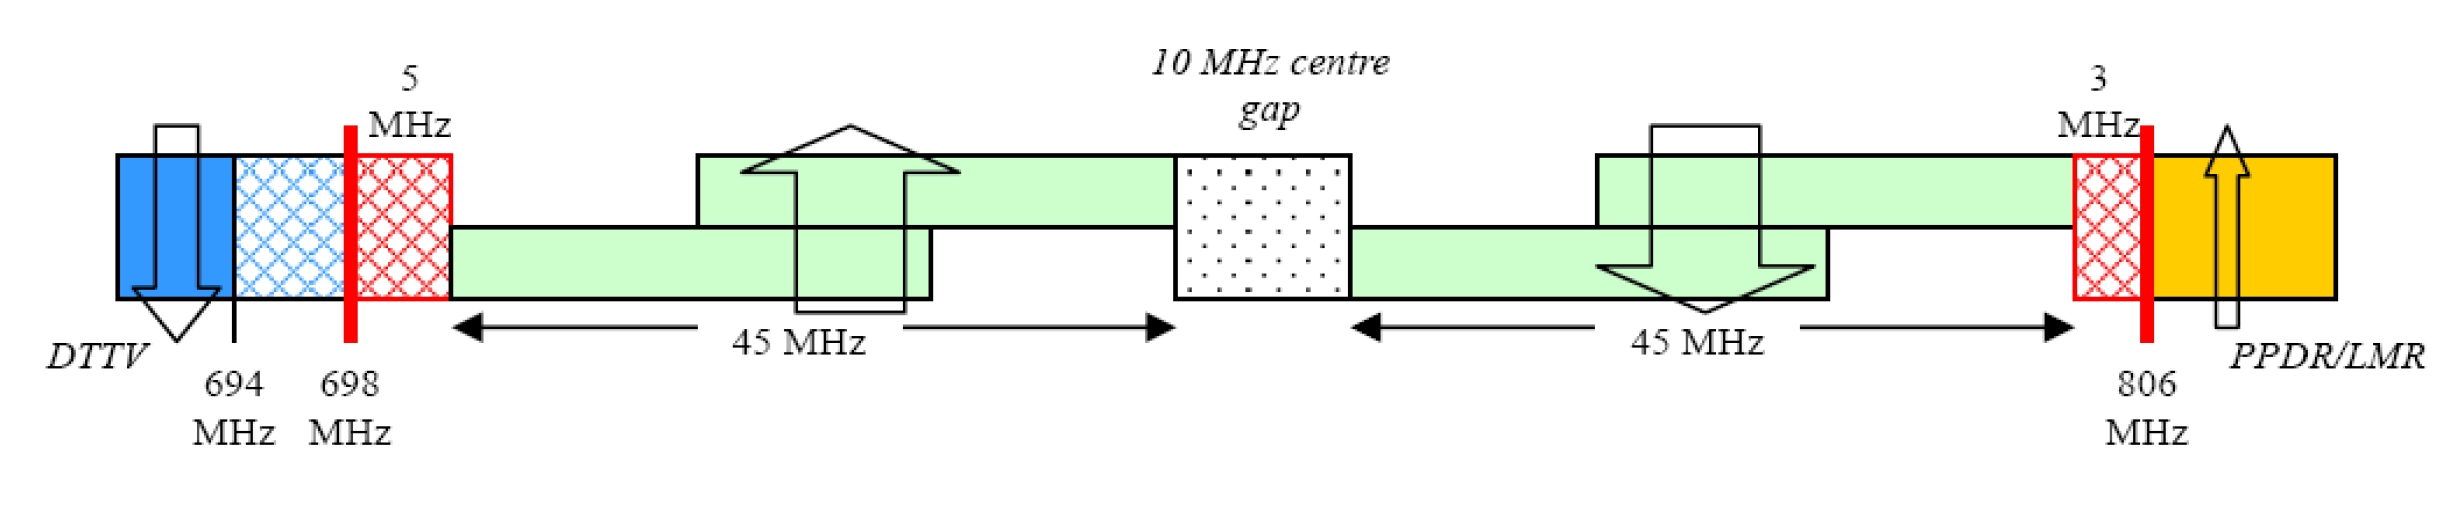 Figure 1 - Harmonised FDD Arrangement in the 698-806 MHz band (APT, 2010)